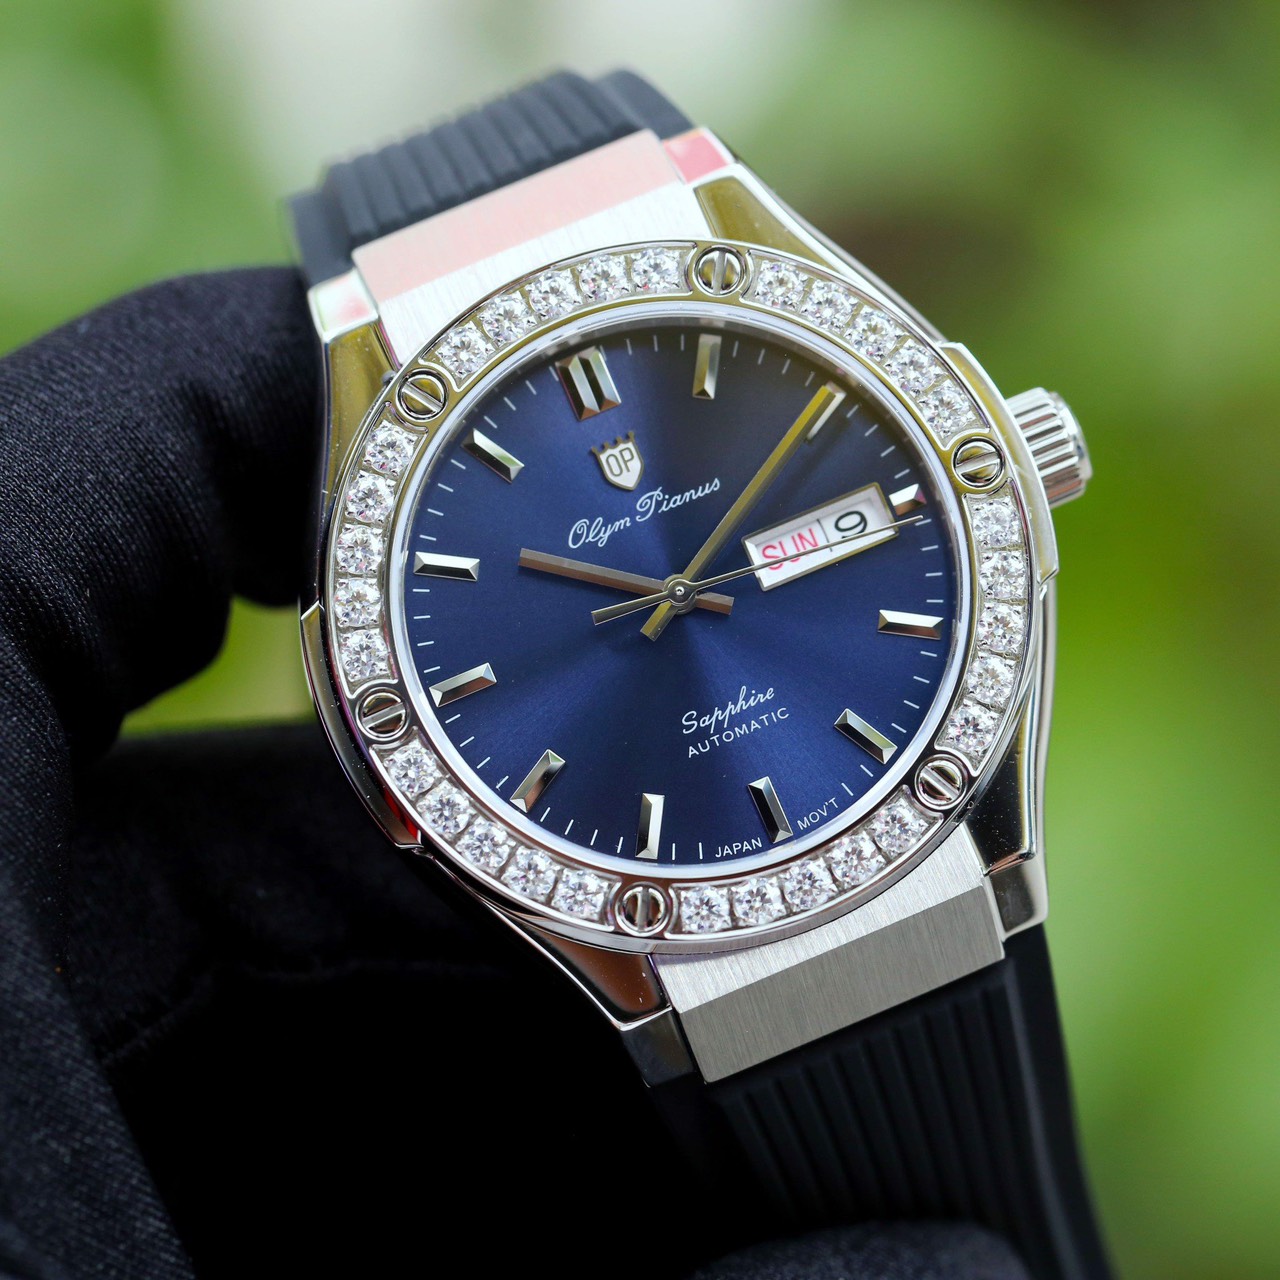 Đồng hồ nữ Olym Pianus OP990-45DLK-GL-T size 34mm